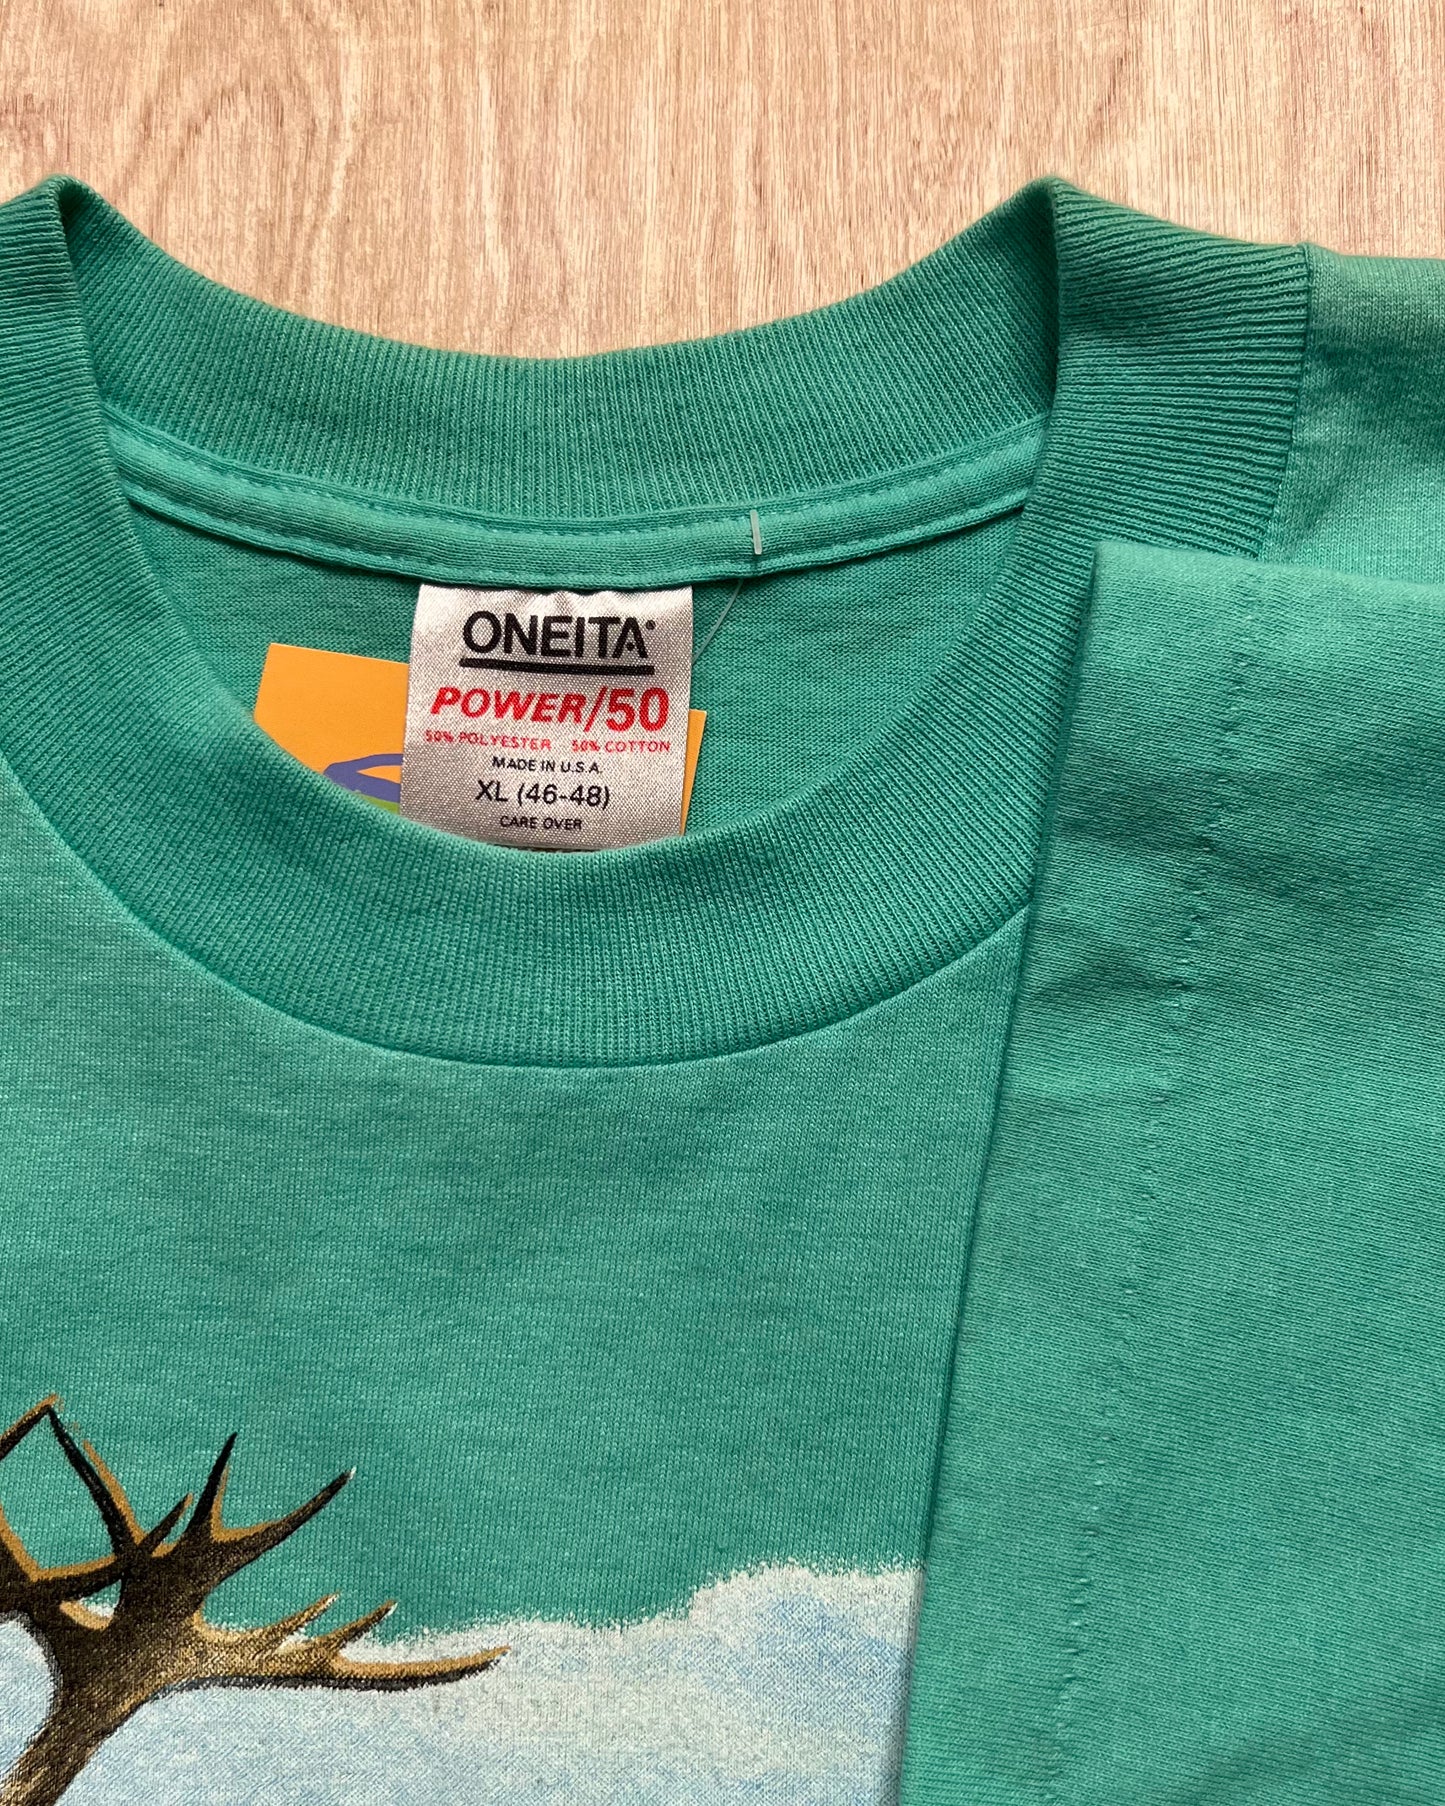 1988 Alaska Reindeer Single Stitch T-Shirt